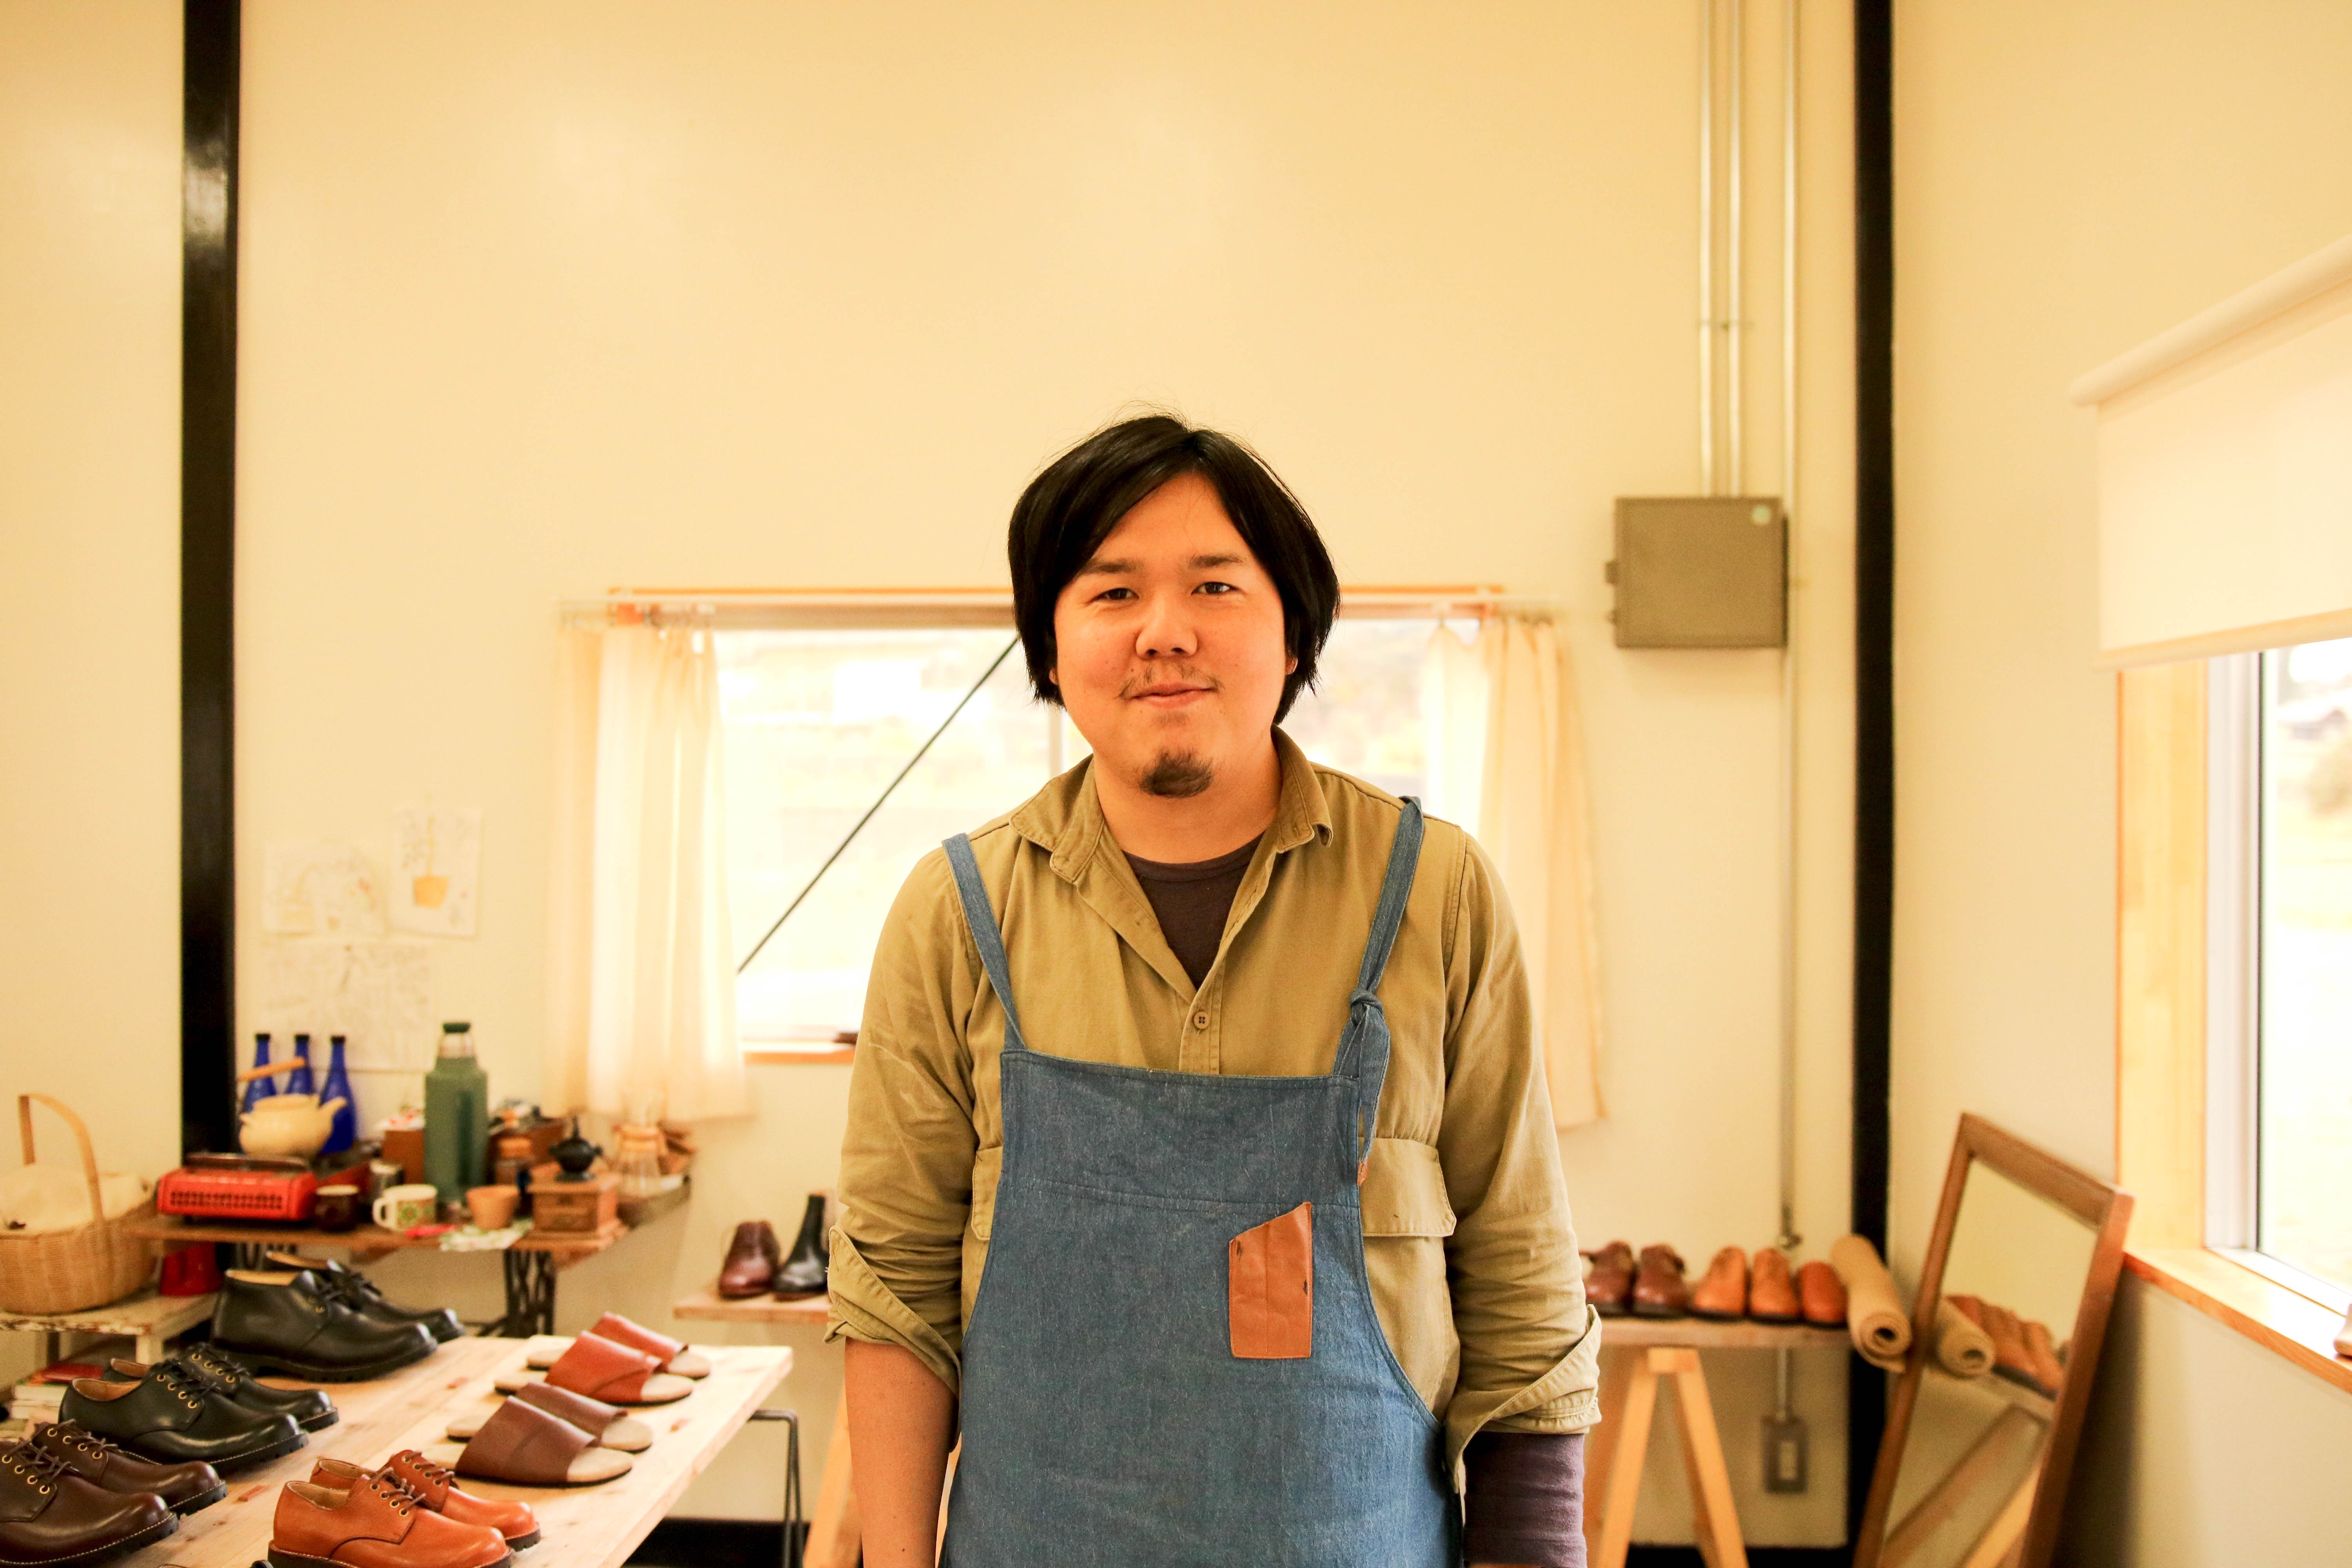 kino shoe works 木下 藤也｜大量生産では出せない、手づくり靴のこだわり